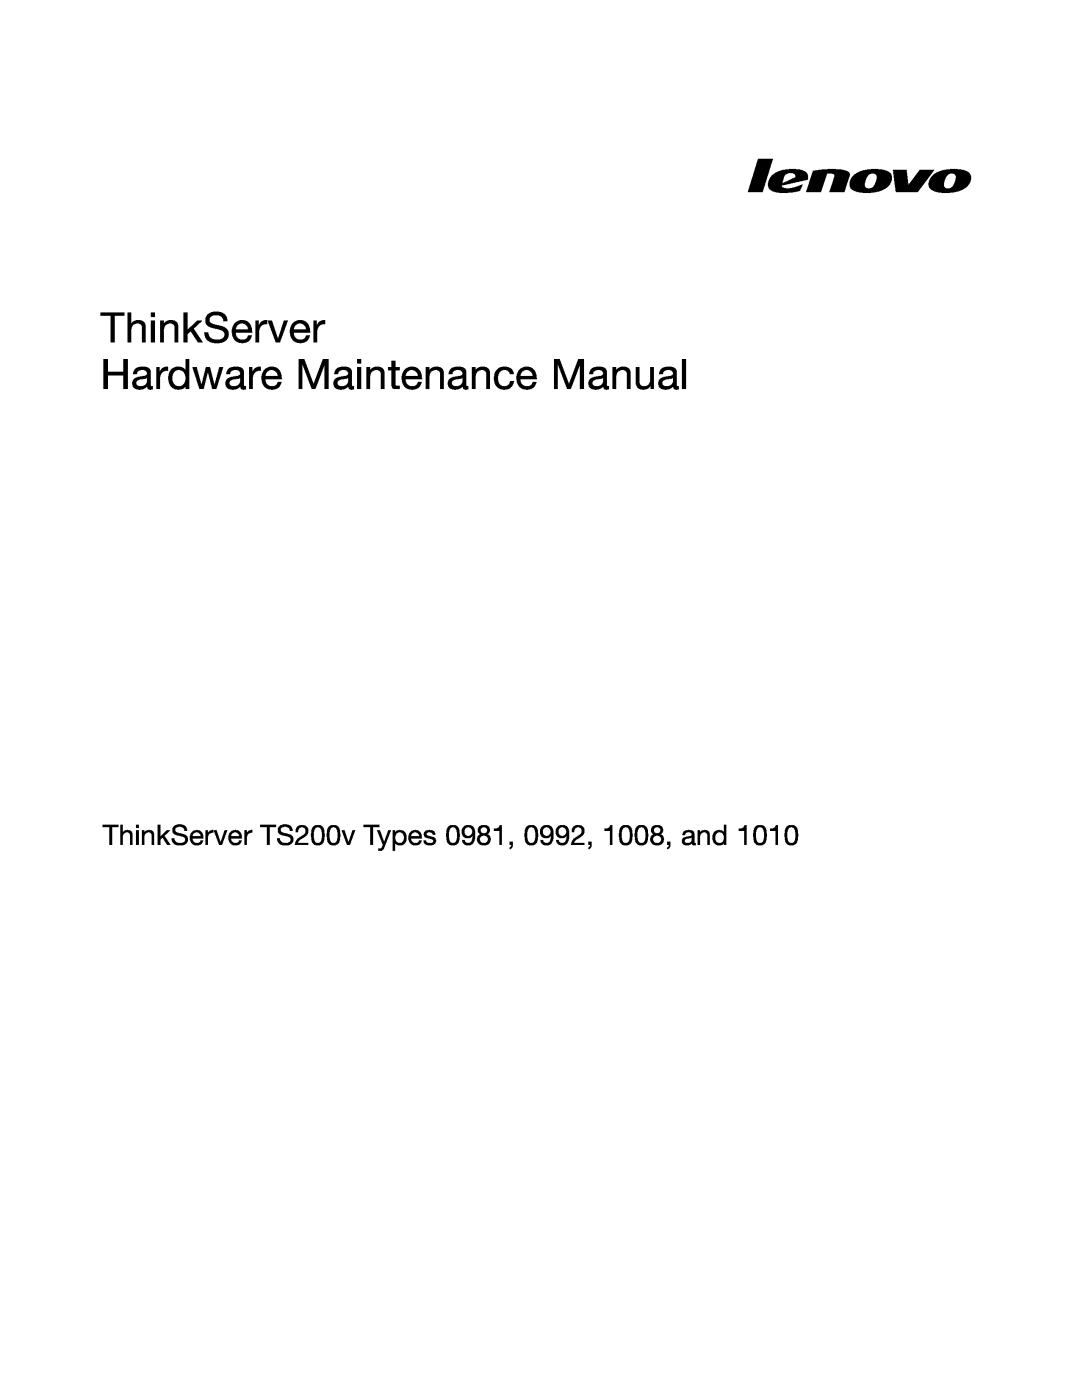 Lenovo 1010 manual ThinkServer Hardware Maintenance Manual, ThinkServer TS200v Types 0981, 0992, 1008, and 